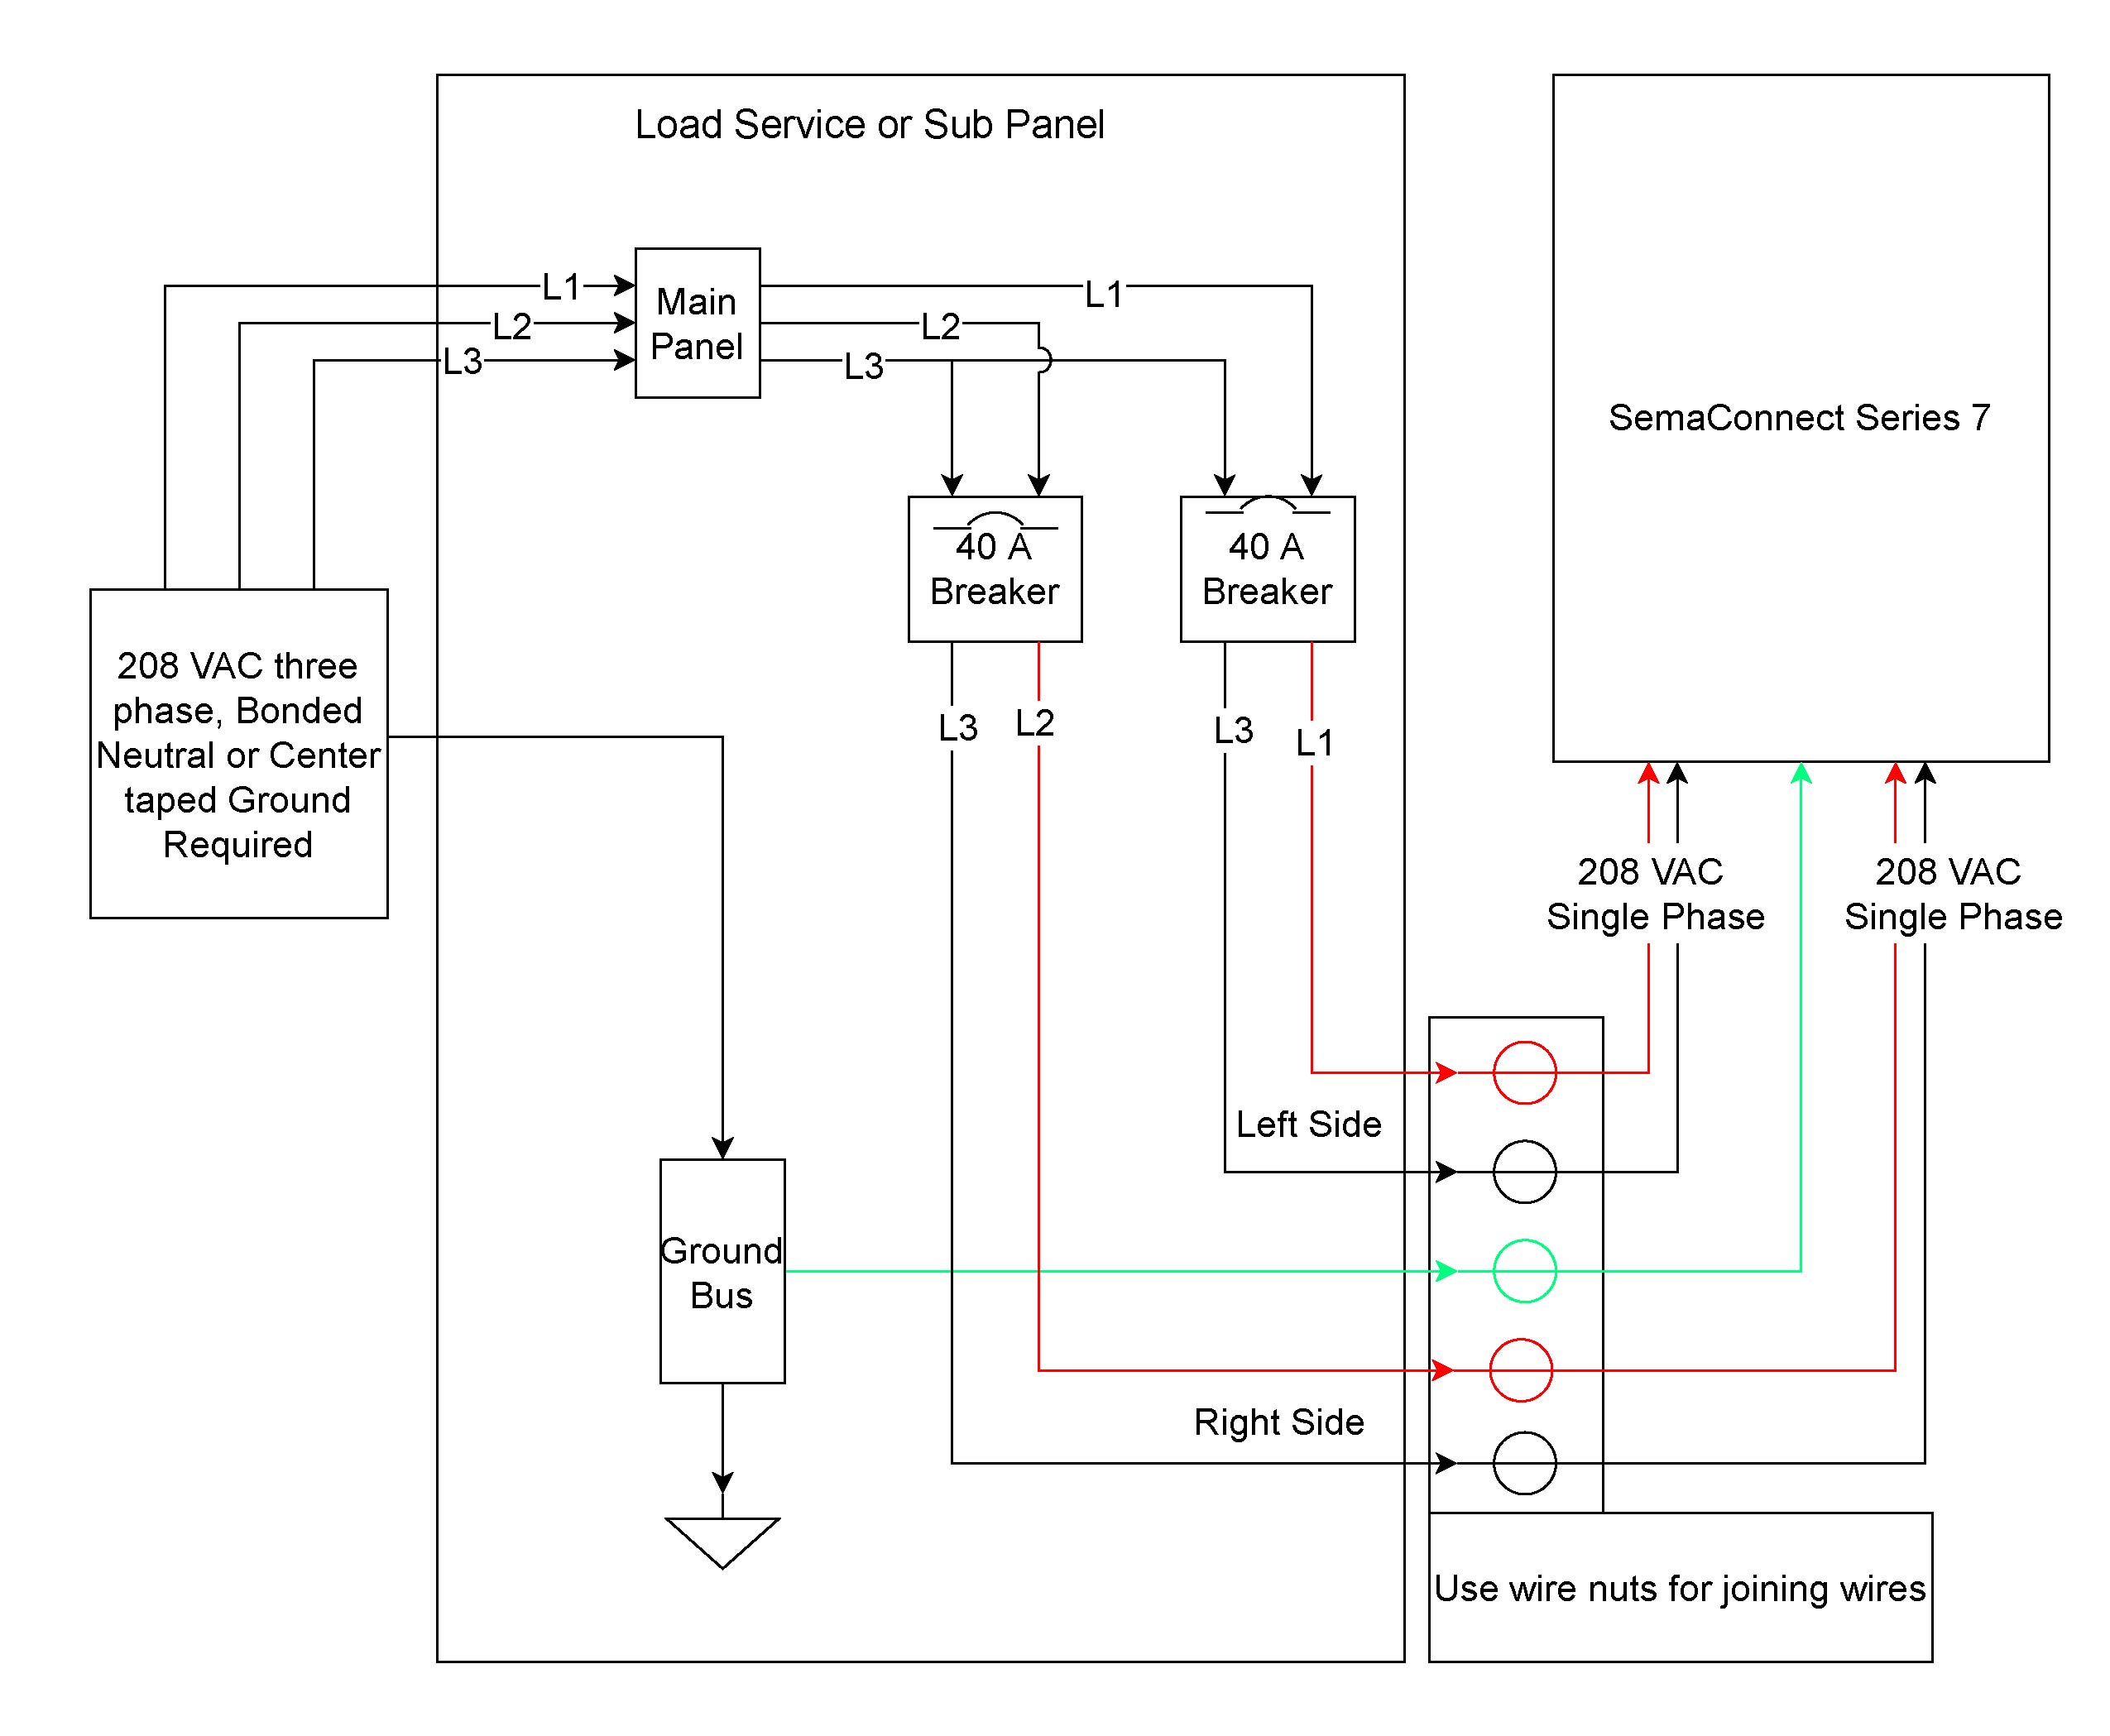 aaladin pressure washer wiring diagram